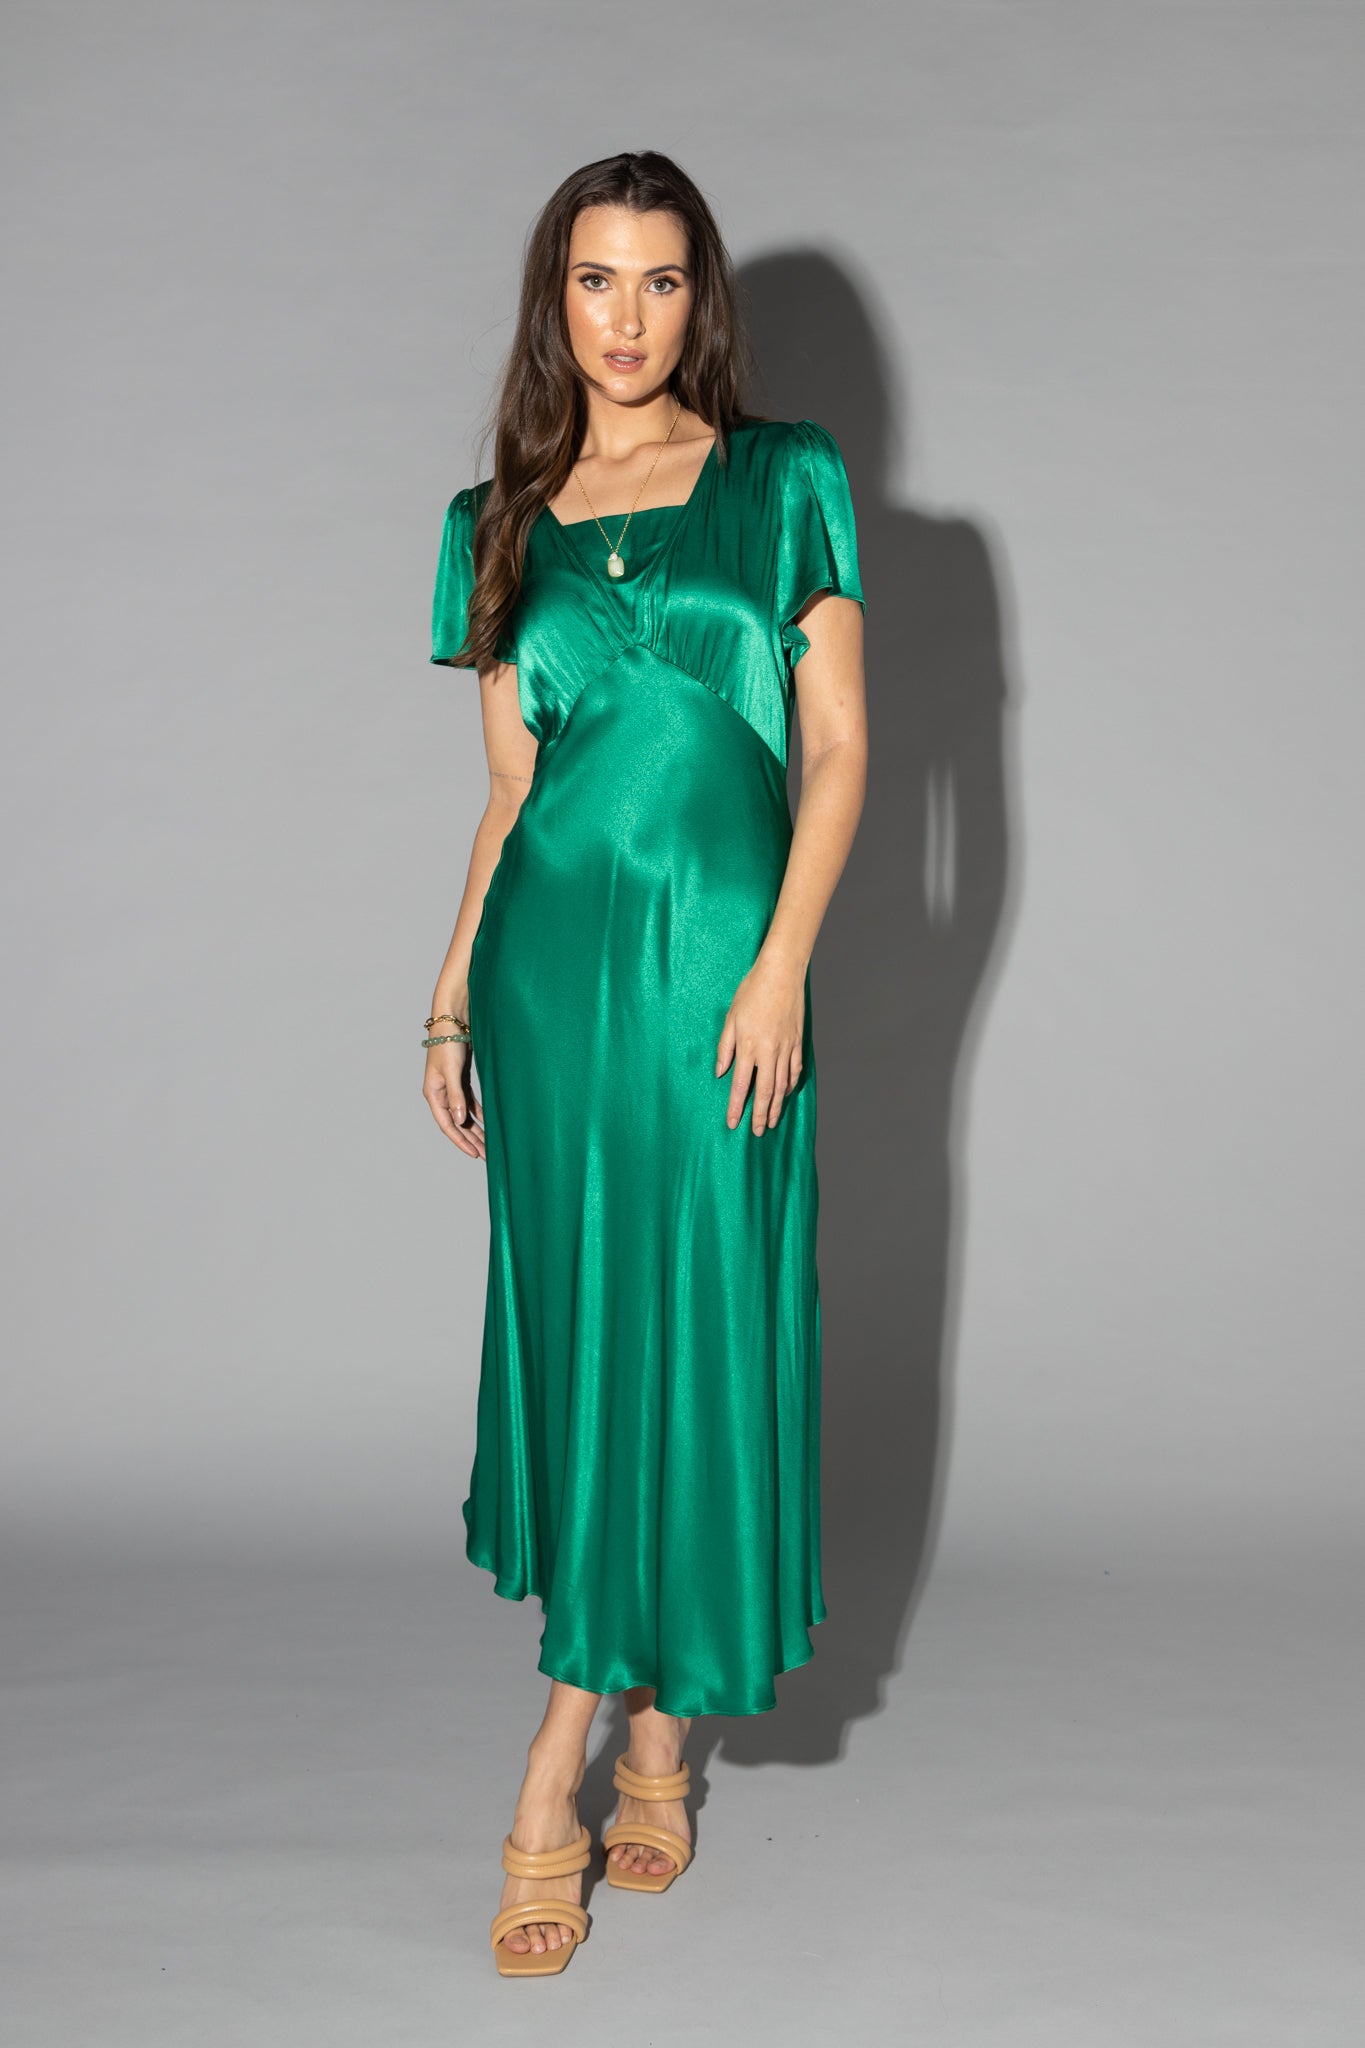 2158 - Alina Dress - Emerald Green